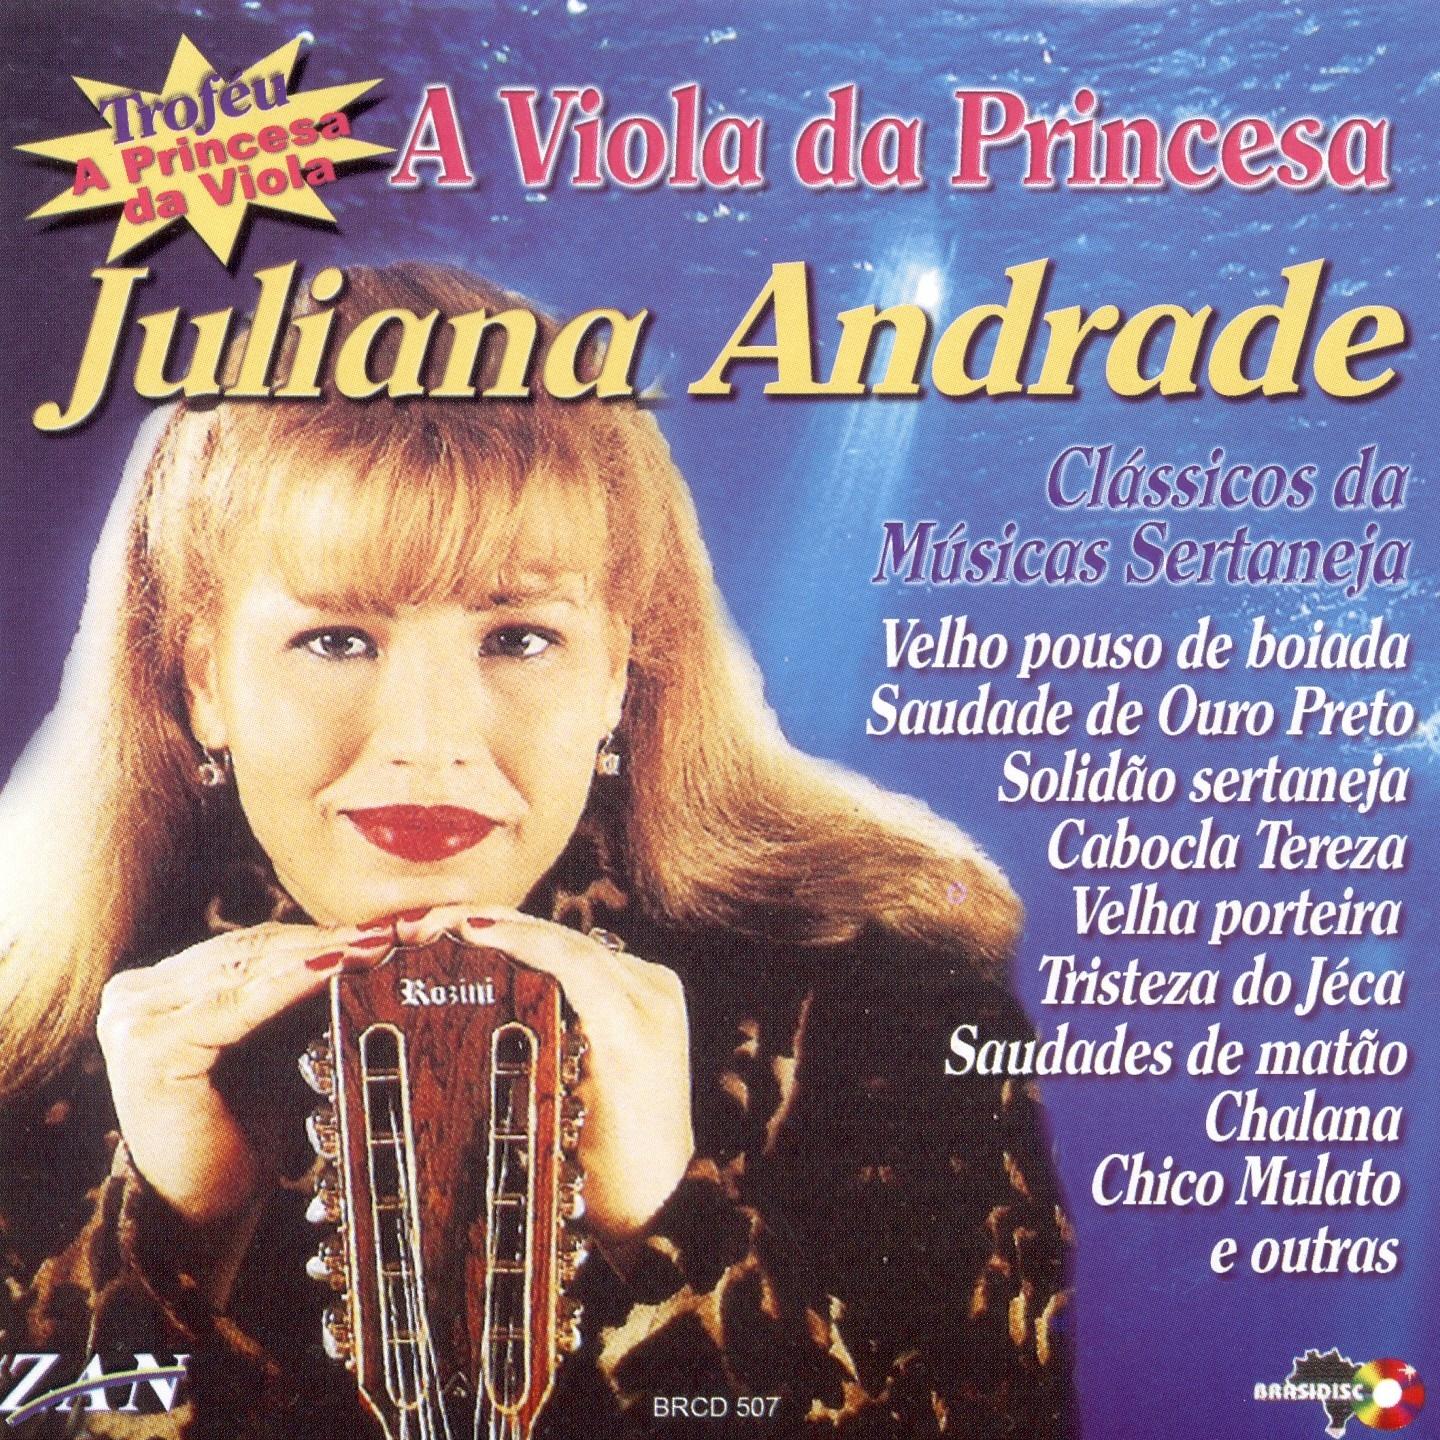 Juliana Andrade - Lembrança